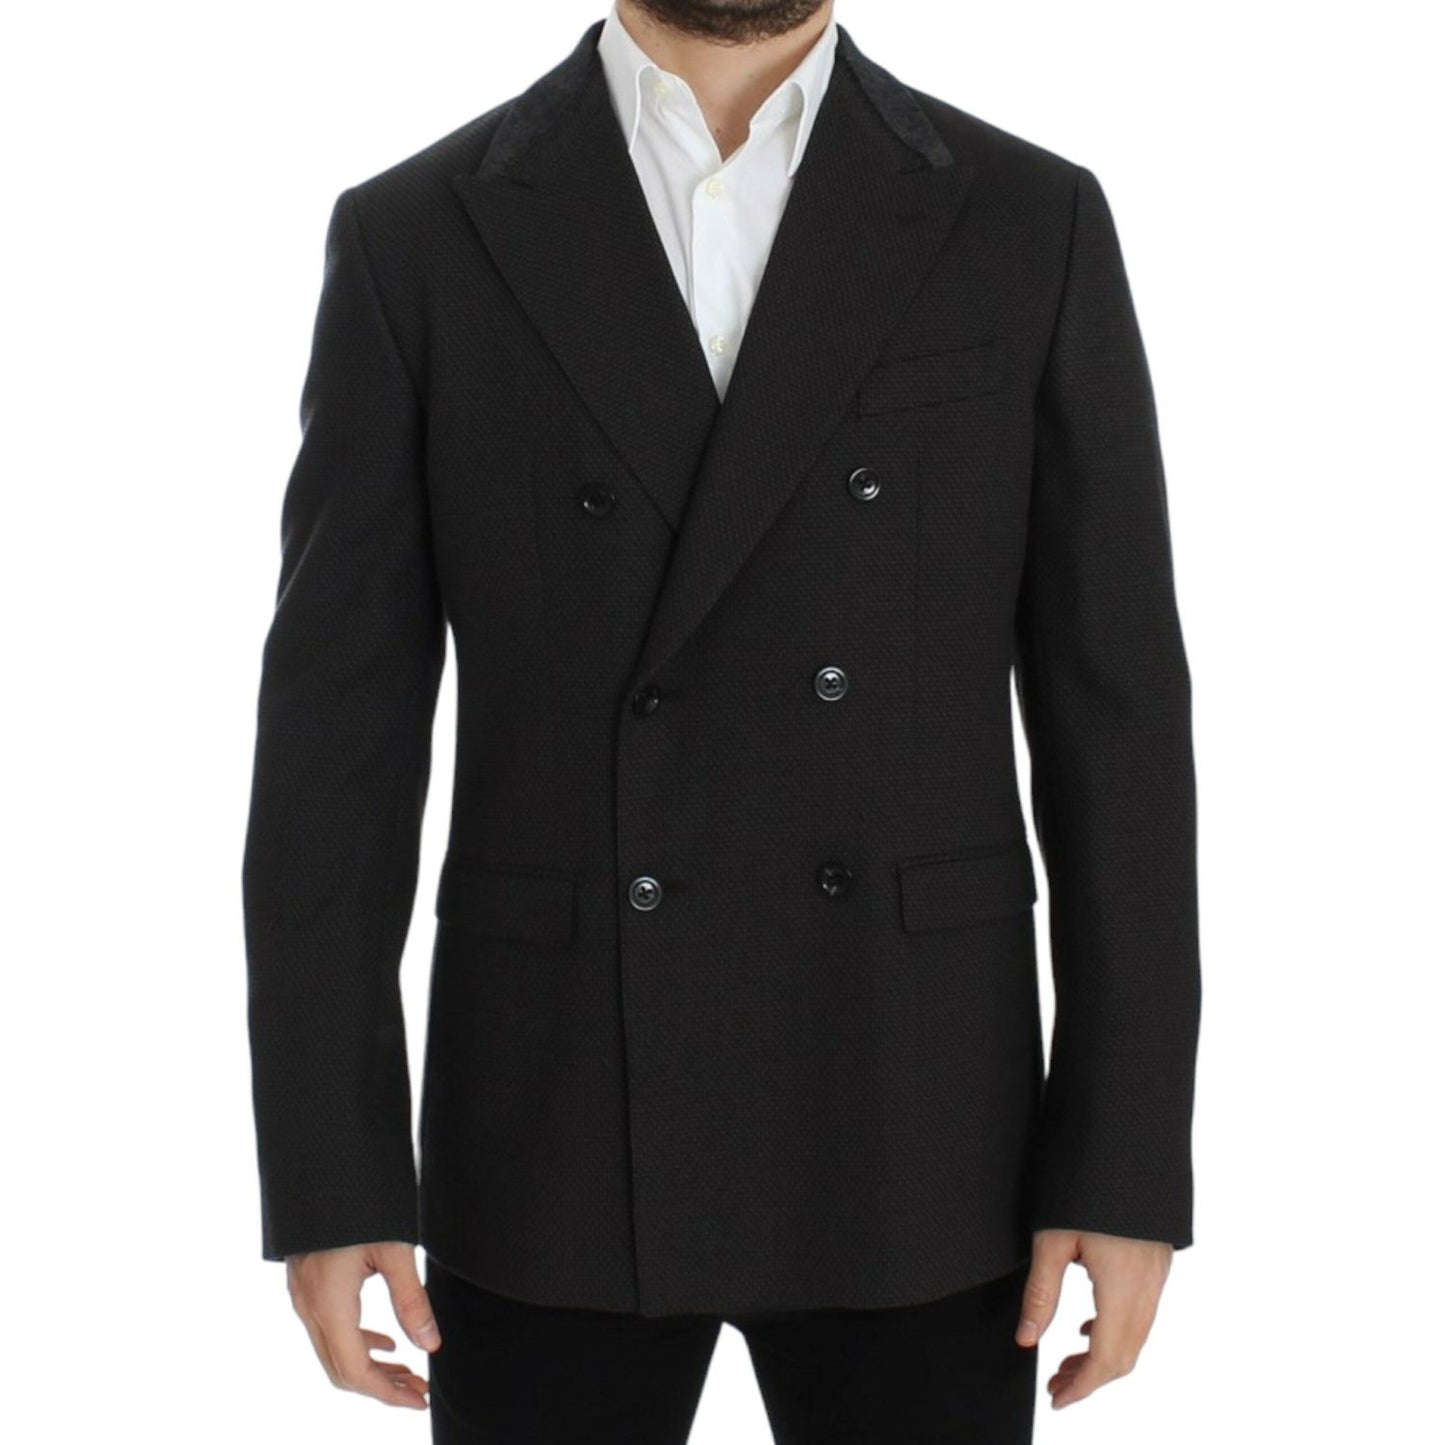 Dolce & Gabbana Elegant Slim Fit Double Breasted Blazer brown-wool-slim-fit-blazer 13251-brown-wool-slim-fit-blazer-3-scaled-dad63826-757.jpg